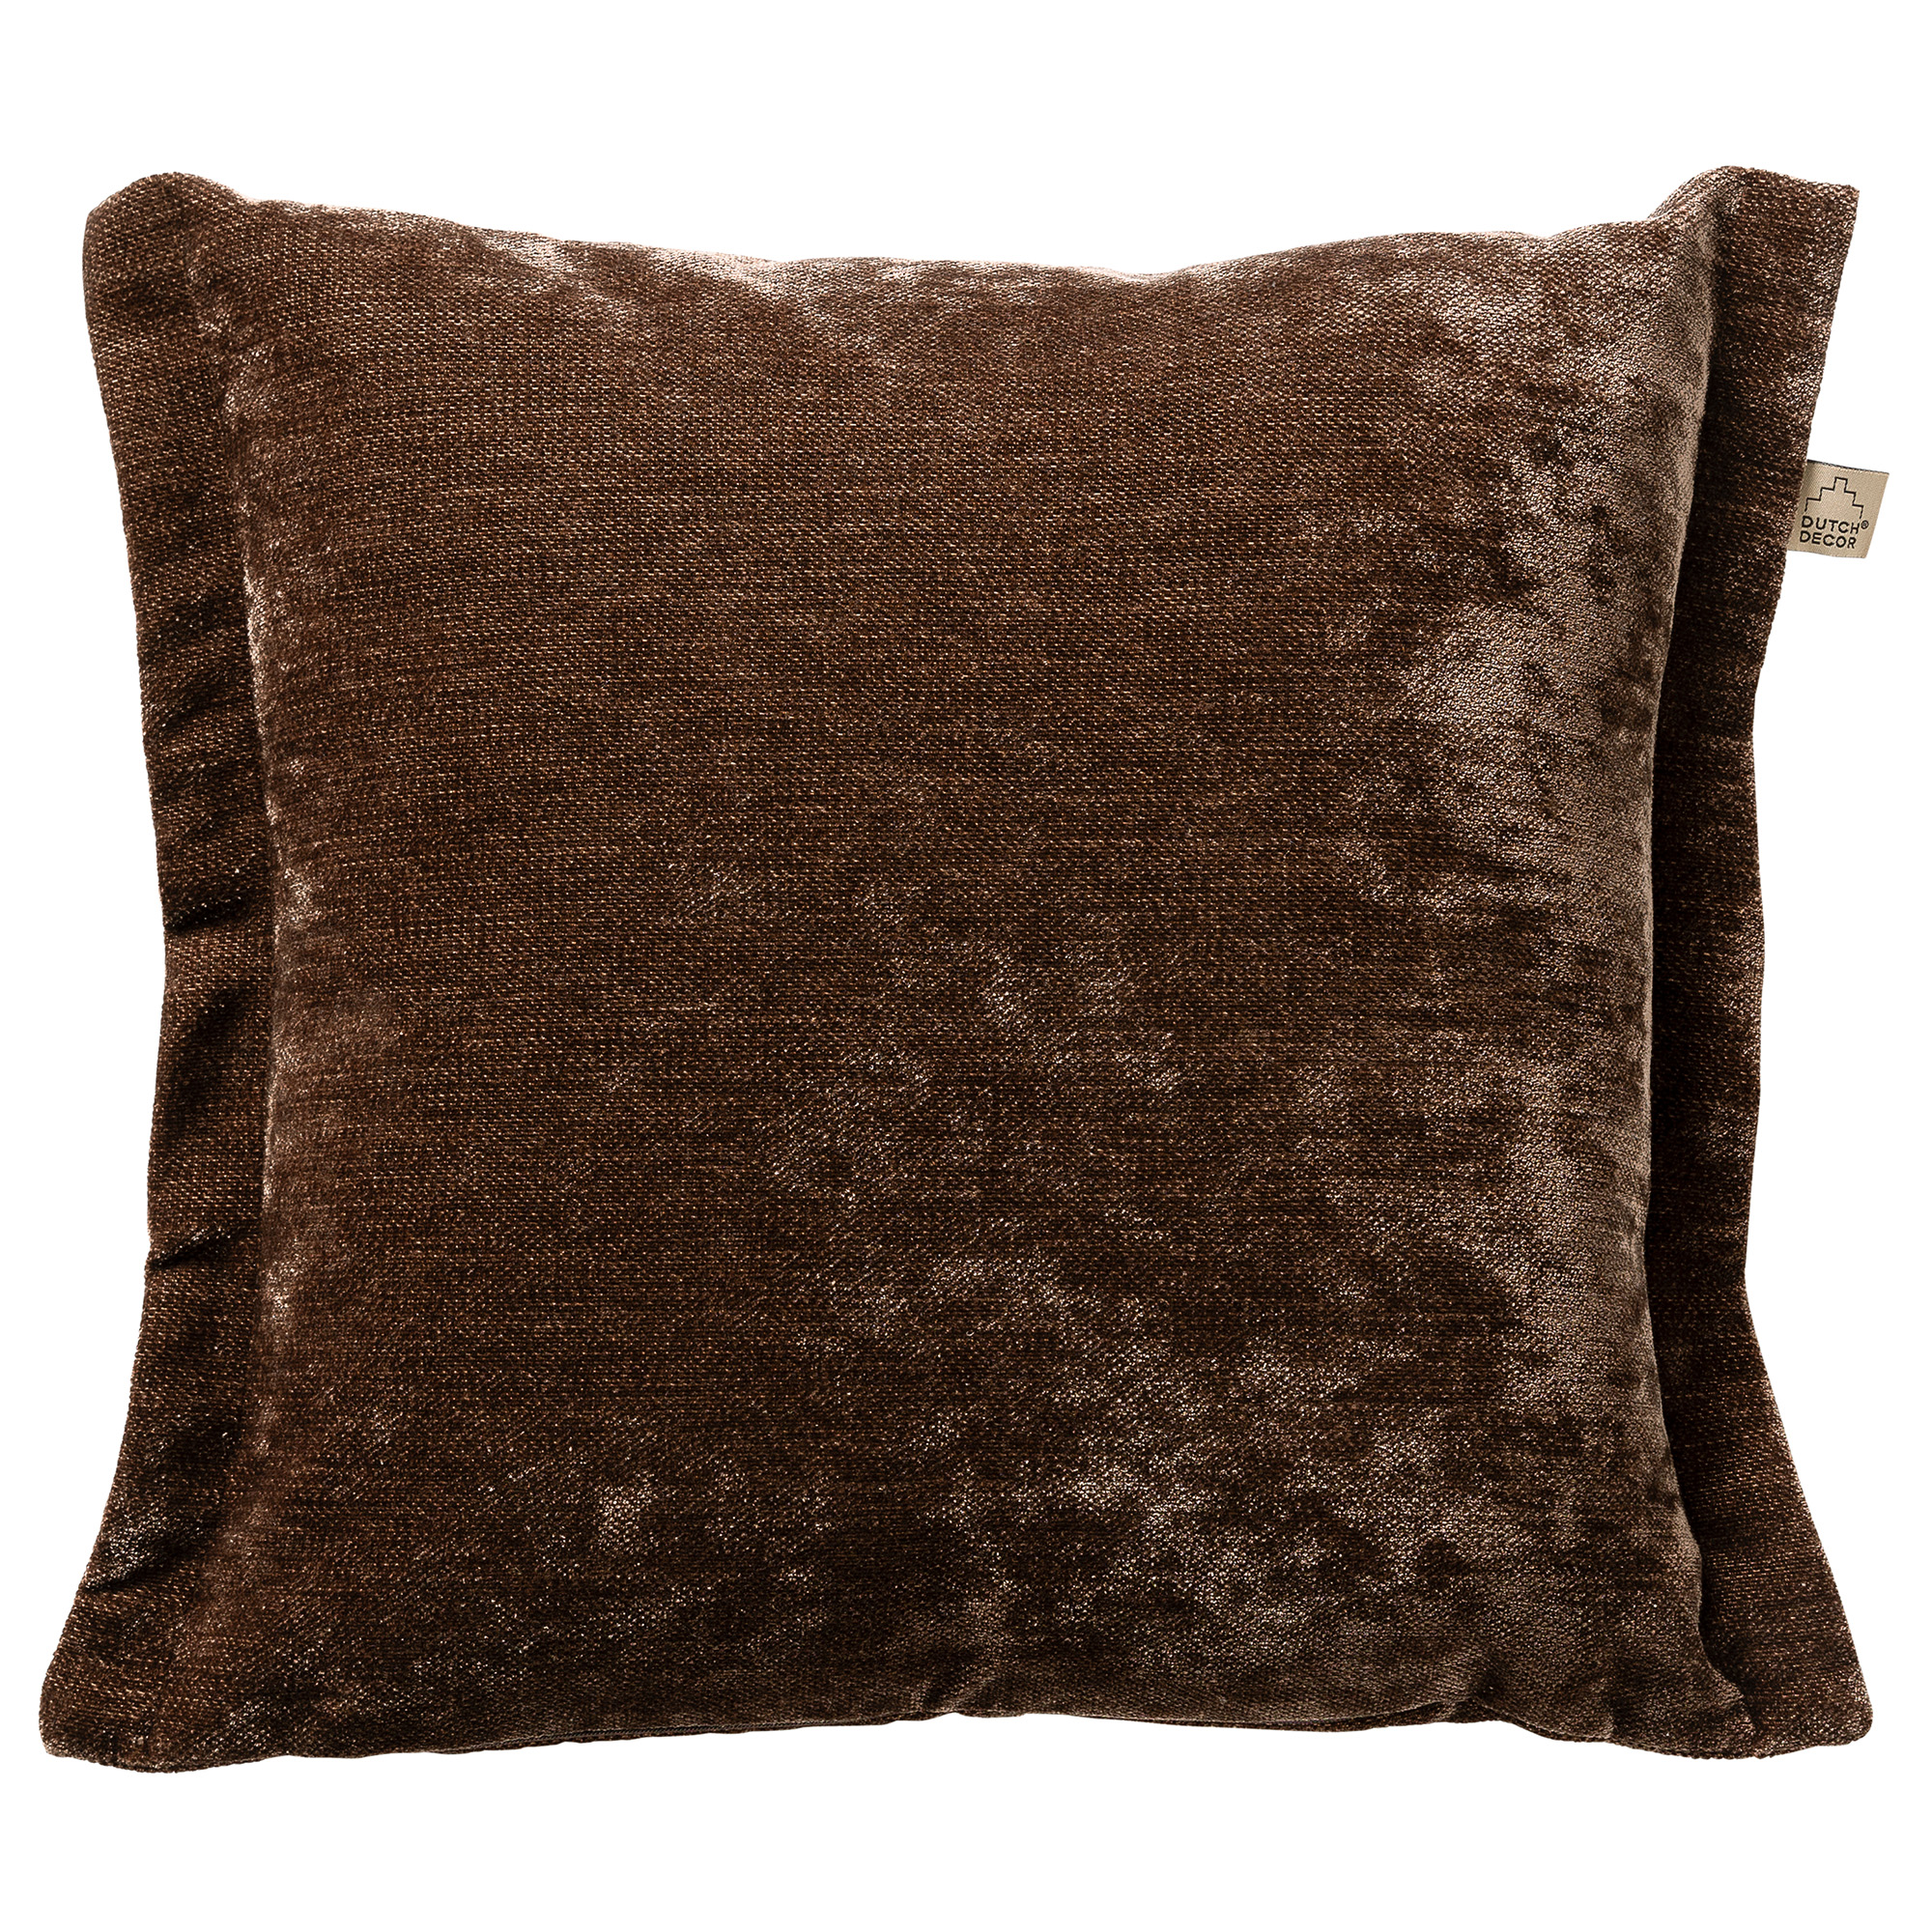 LEWIS - Cushion 45x45 cm - Chocolate Martini - brown